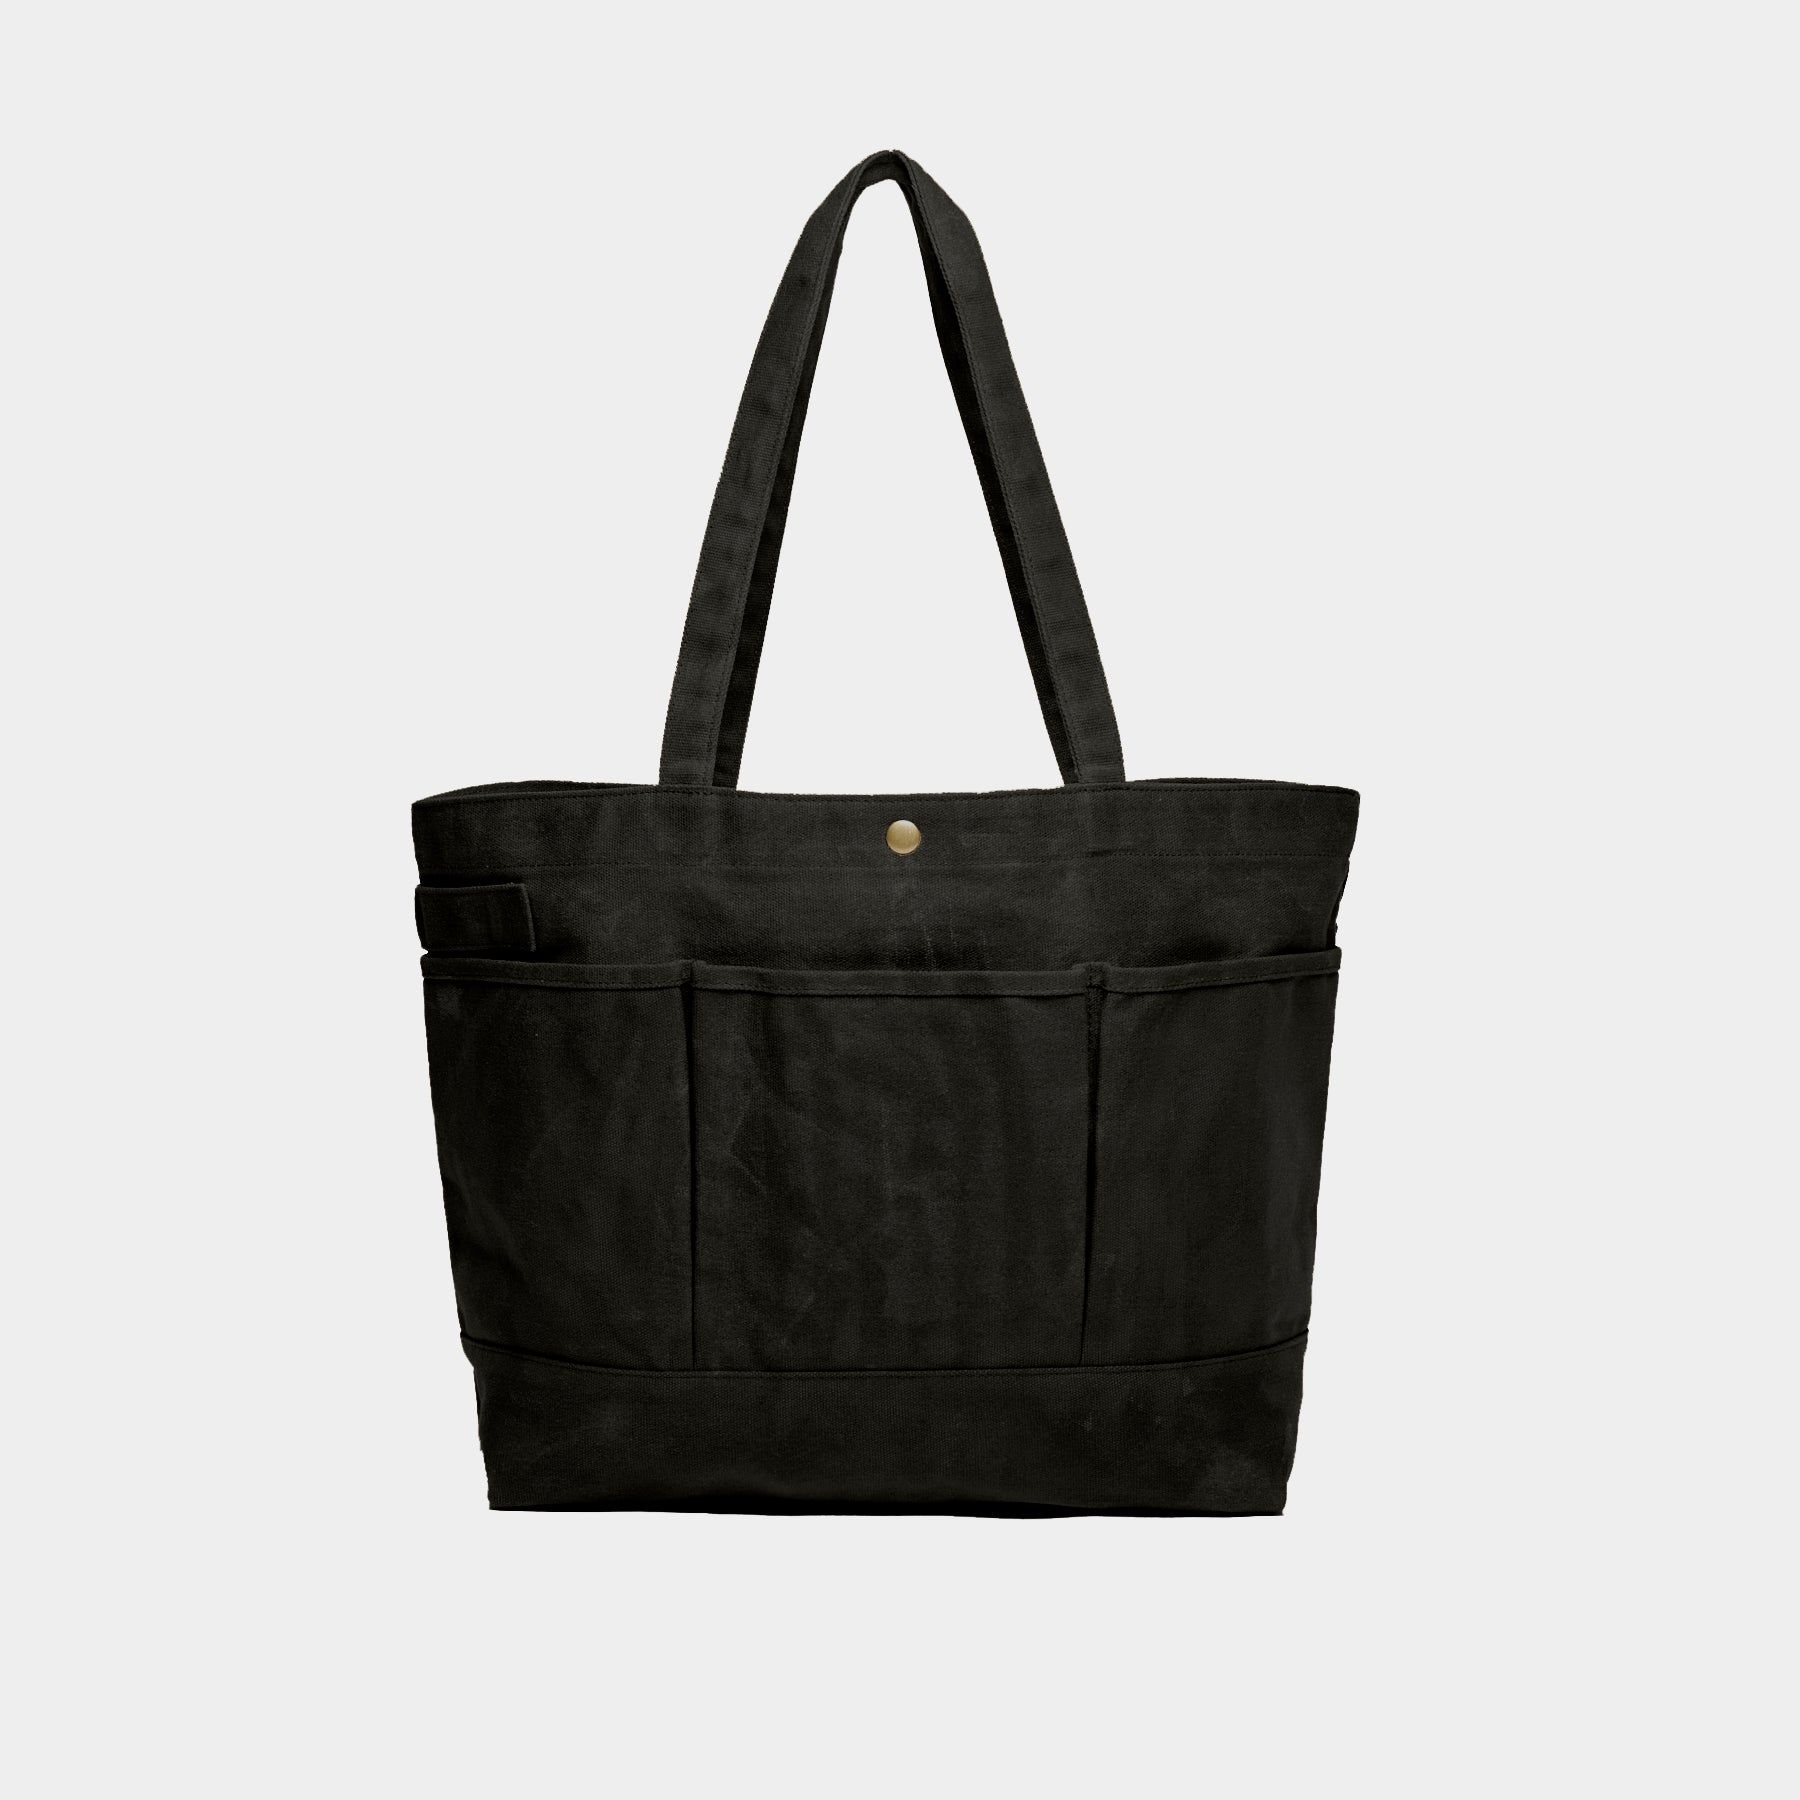 Gardenheir Waxed Cotton Tote Bag in Black